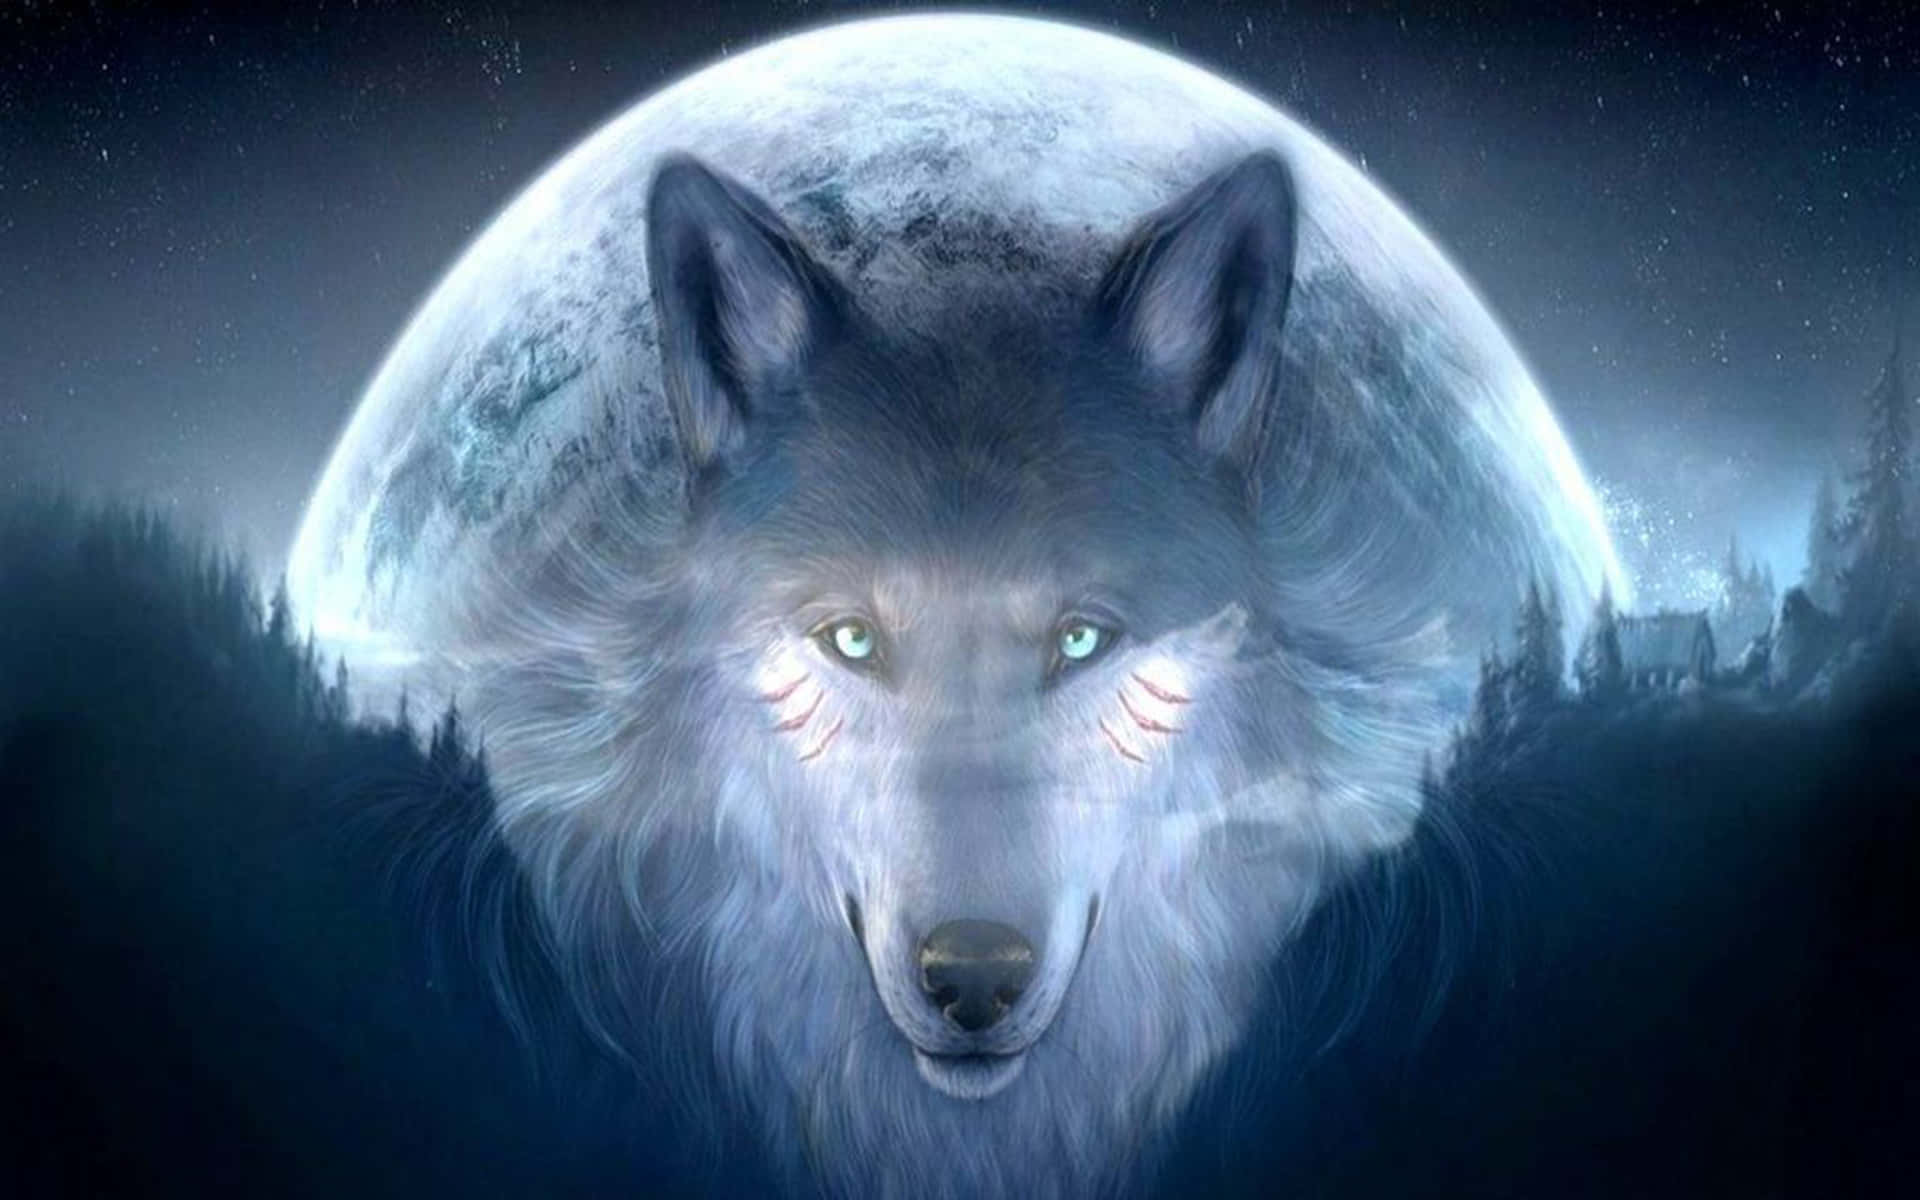 Intense Fierce Wolf Glaring in the Moonlight Wallpaper